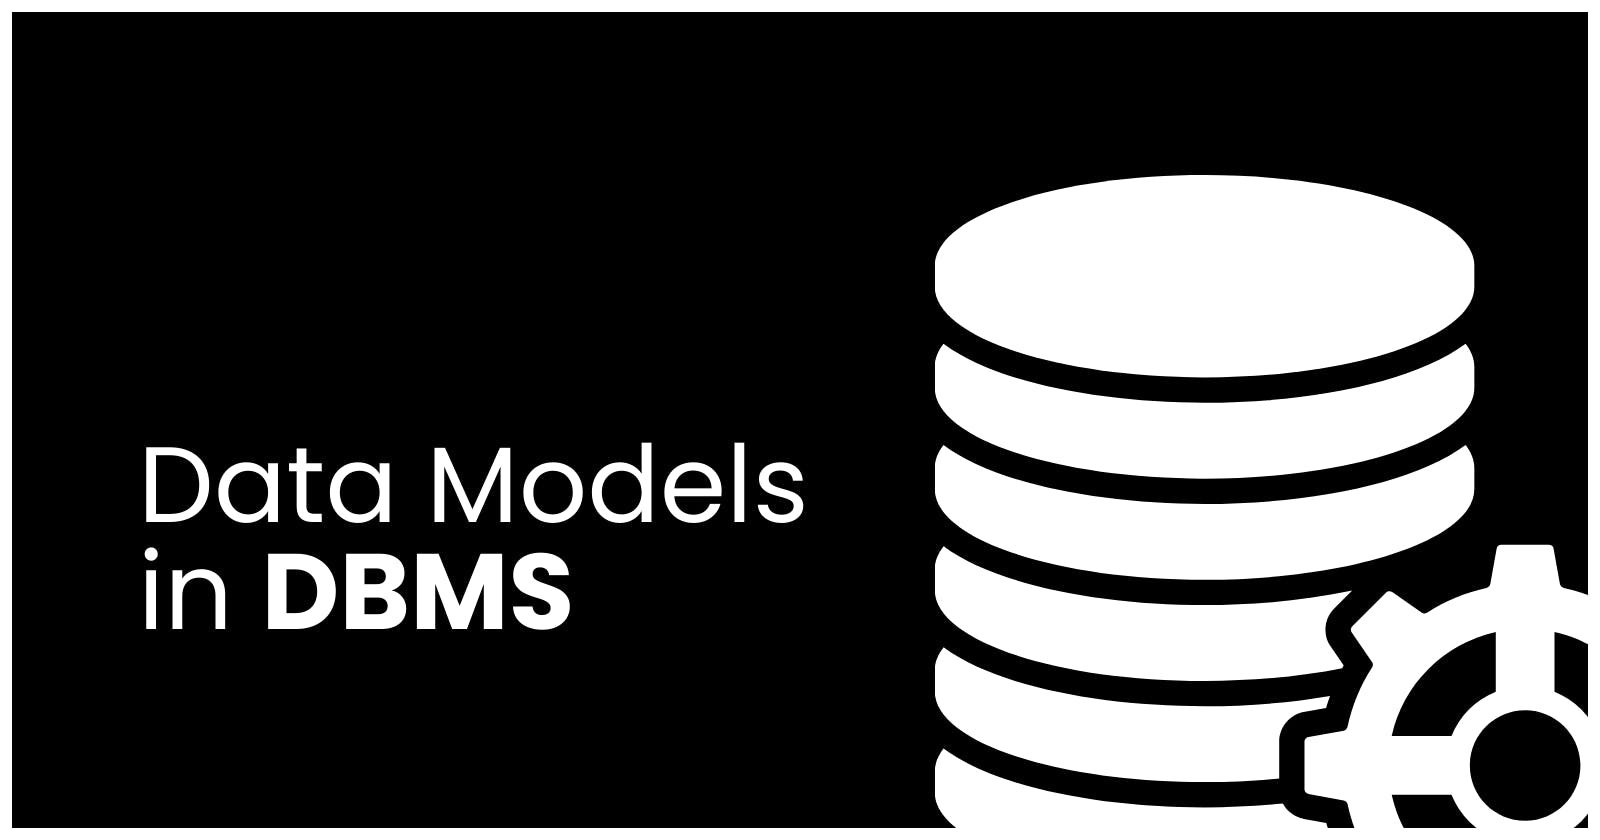 Data Models in DBMS